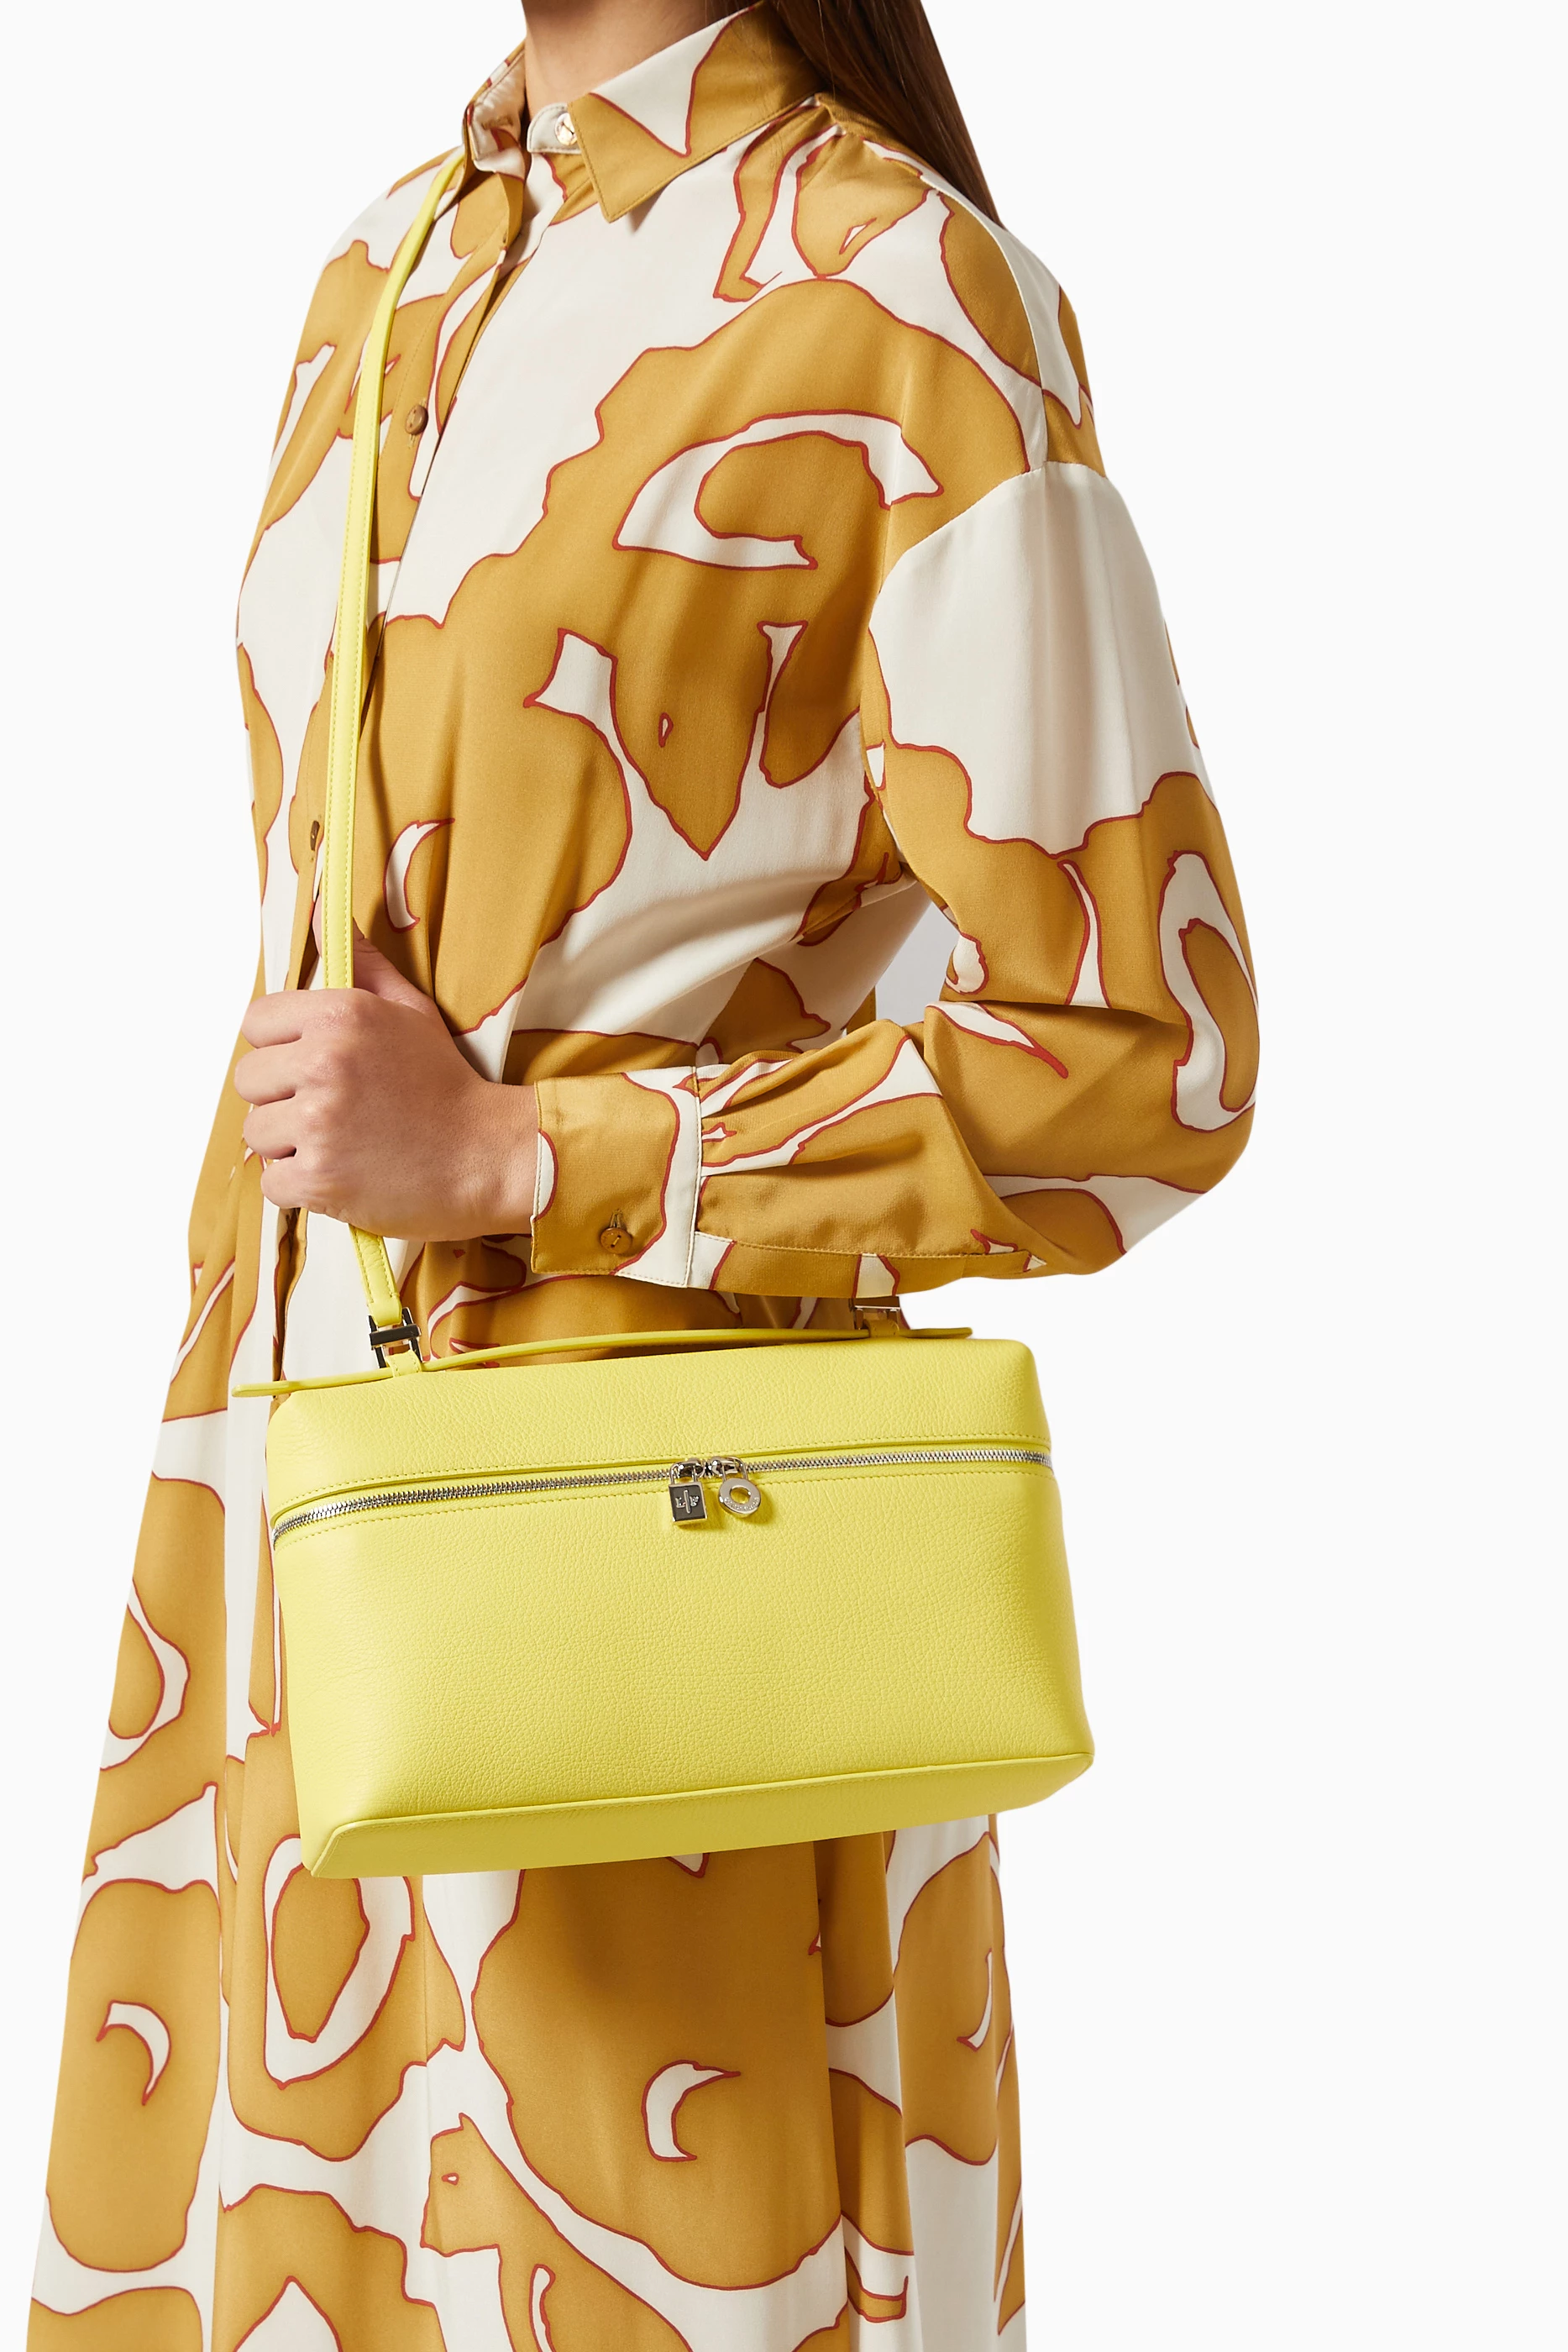 Loro Piana Ostrich Extra Pocket L27 Cross-body Bag in Yellow